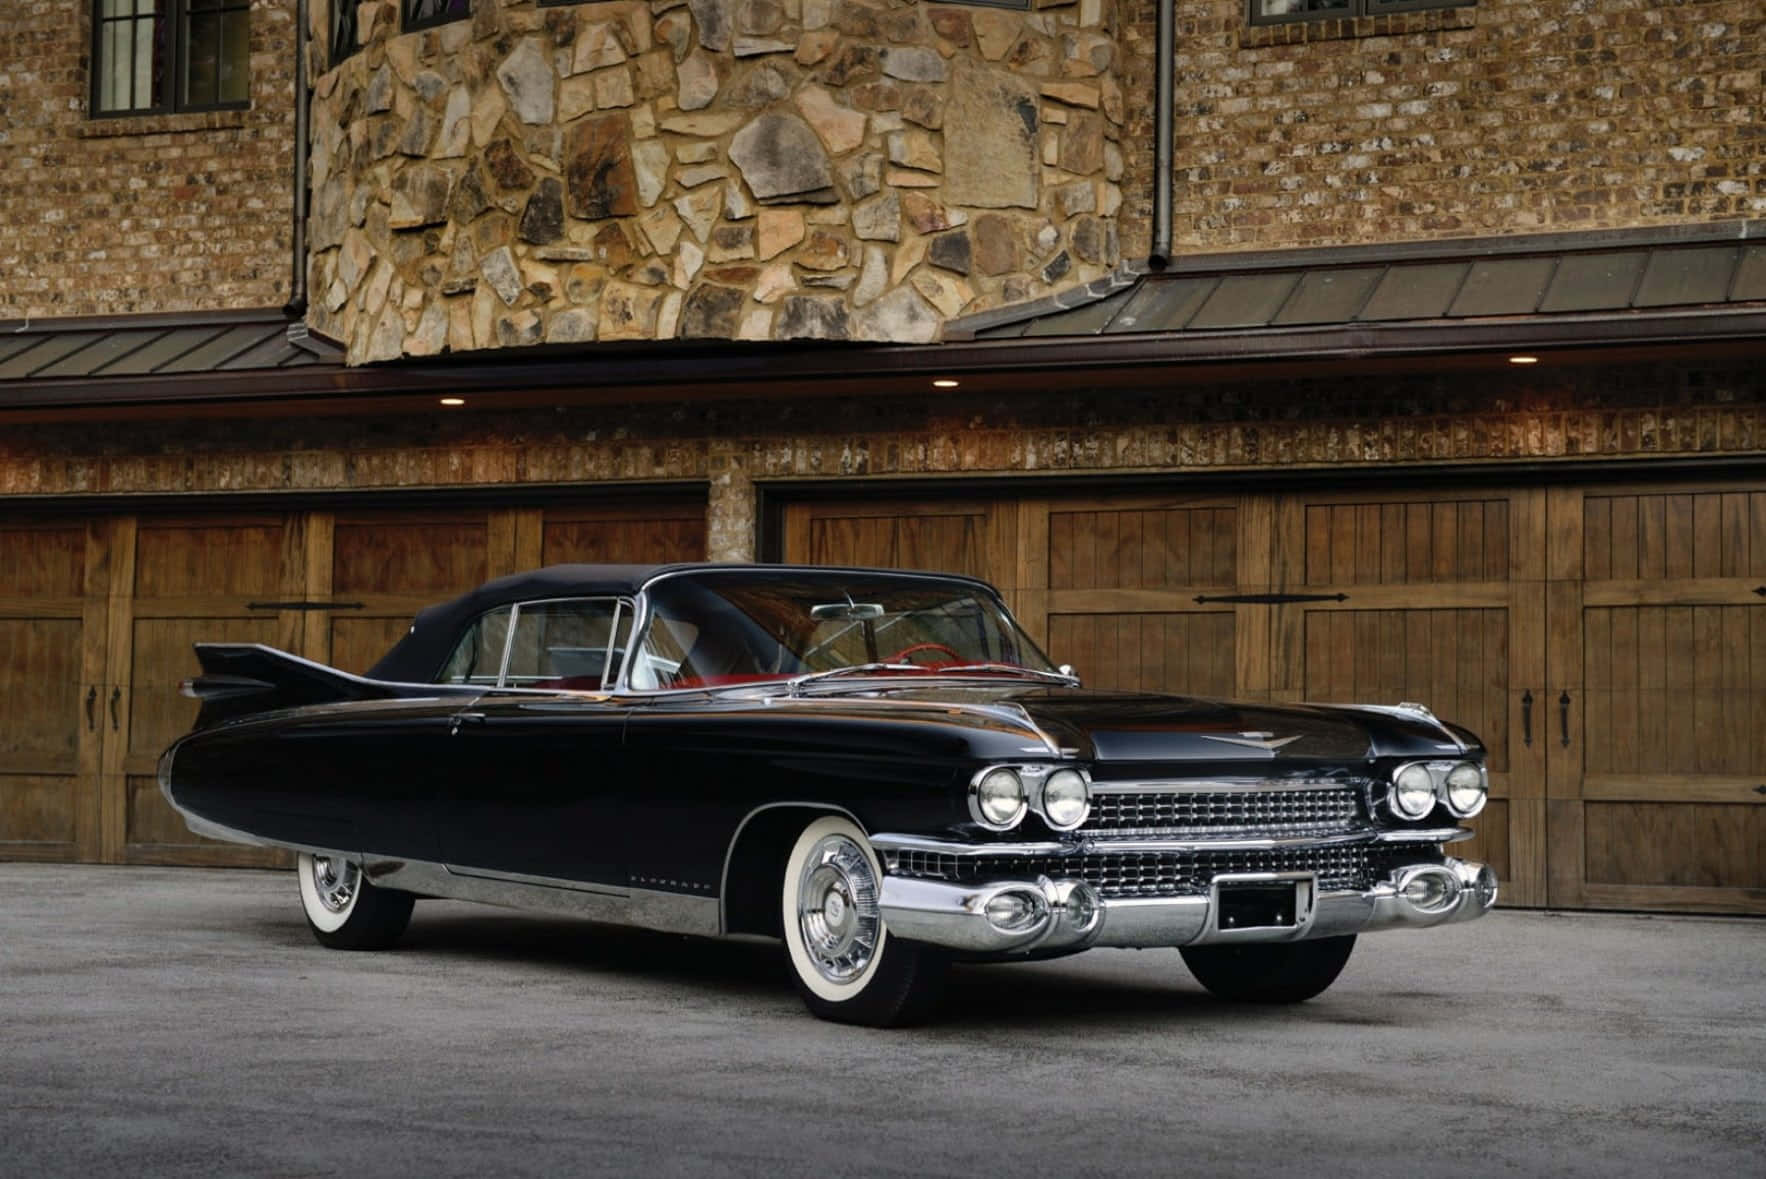 Caption: Classic Cadillac Eldorado on Display Wallpaper